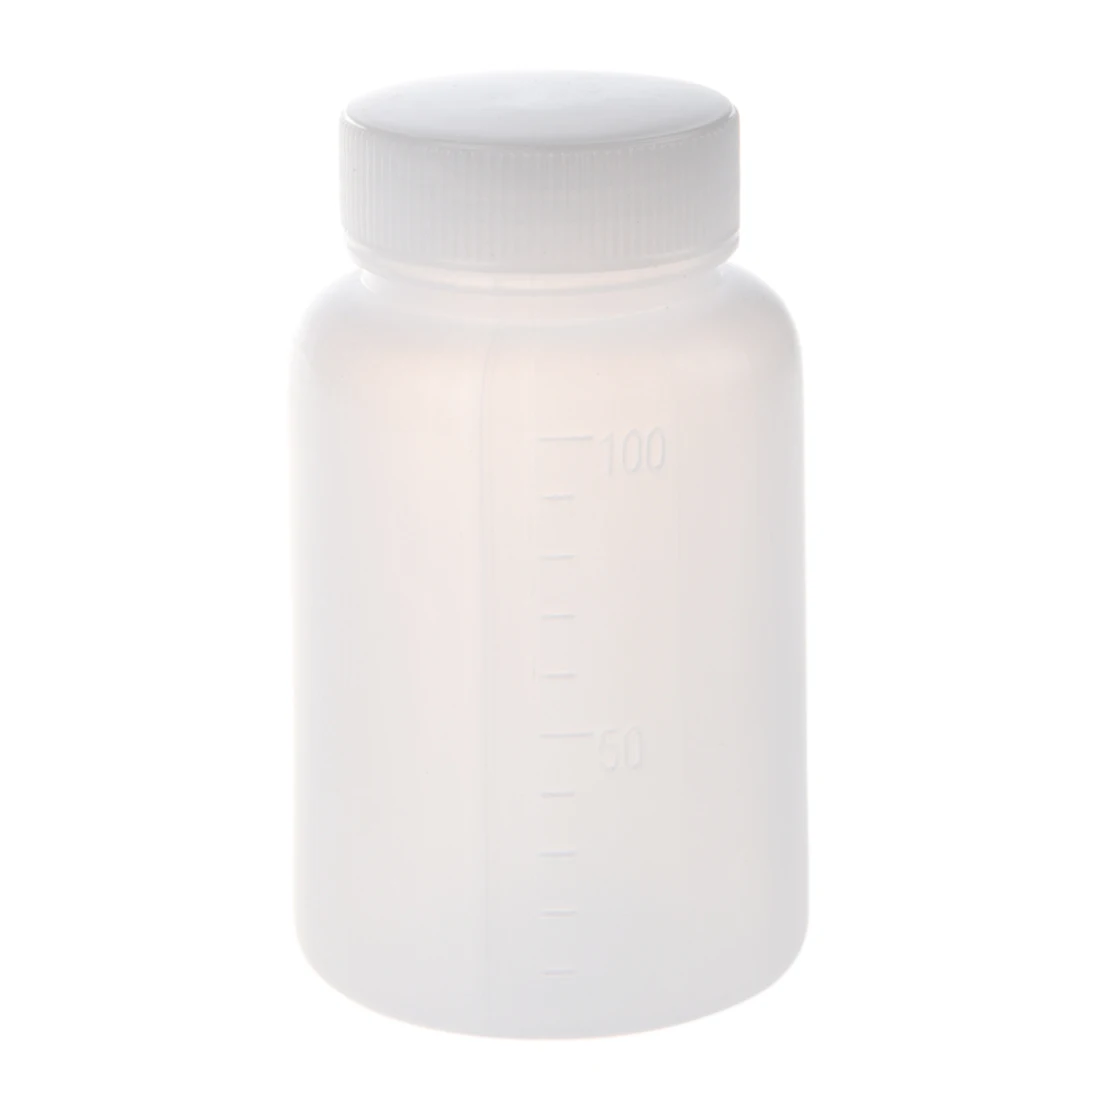 Лаборатория химической чемодан белый Пластик Widemouth бутылка 100 мл